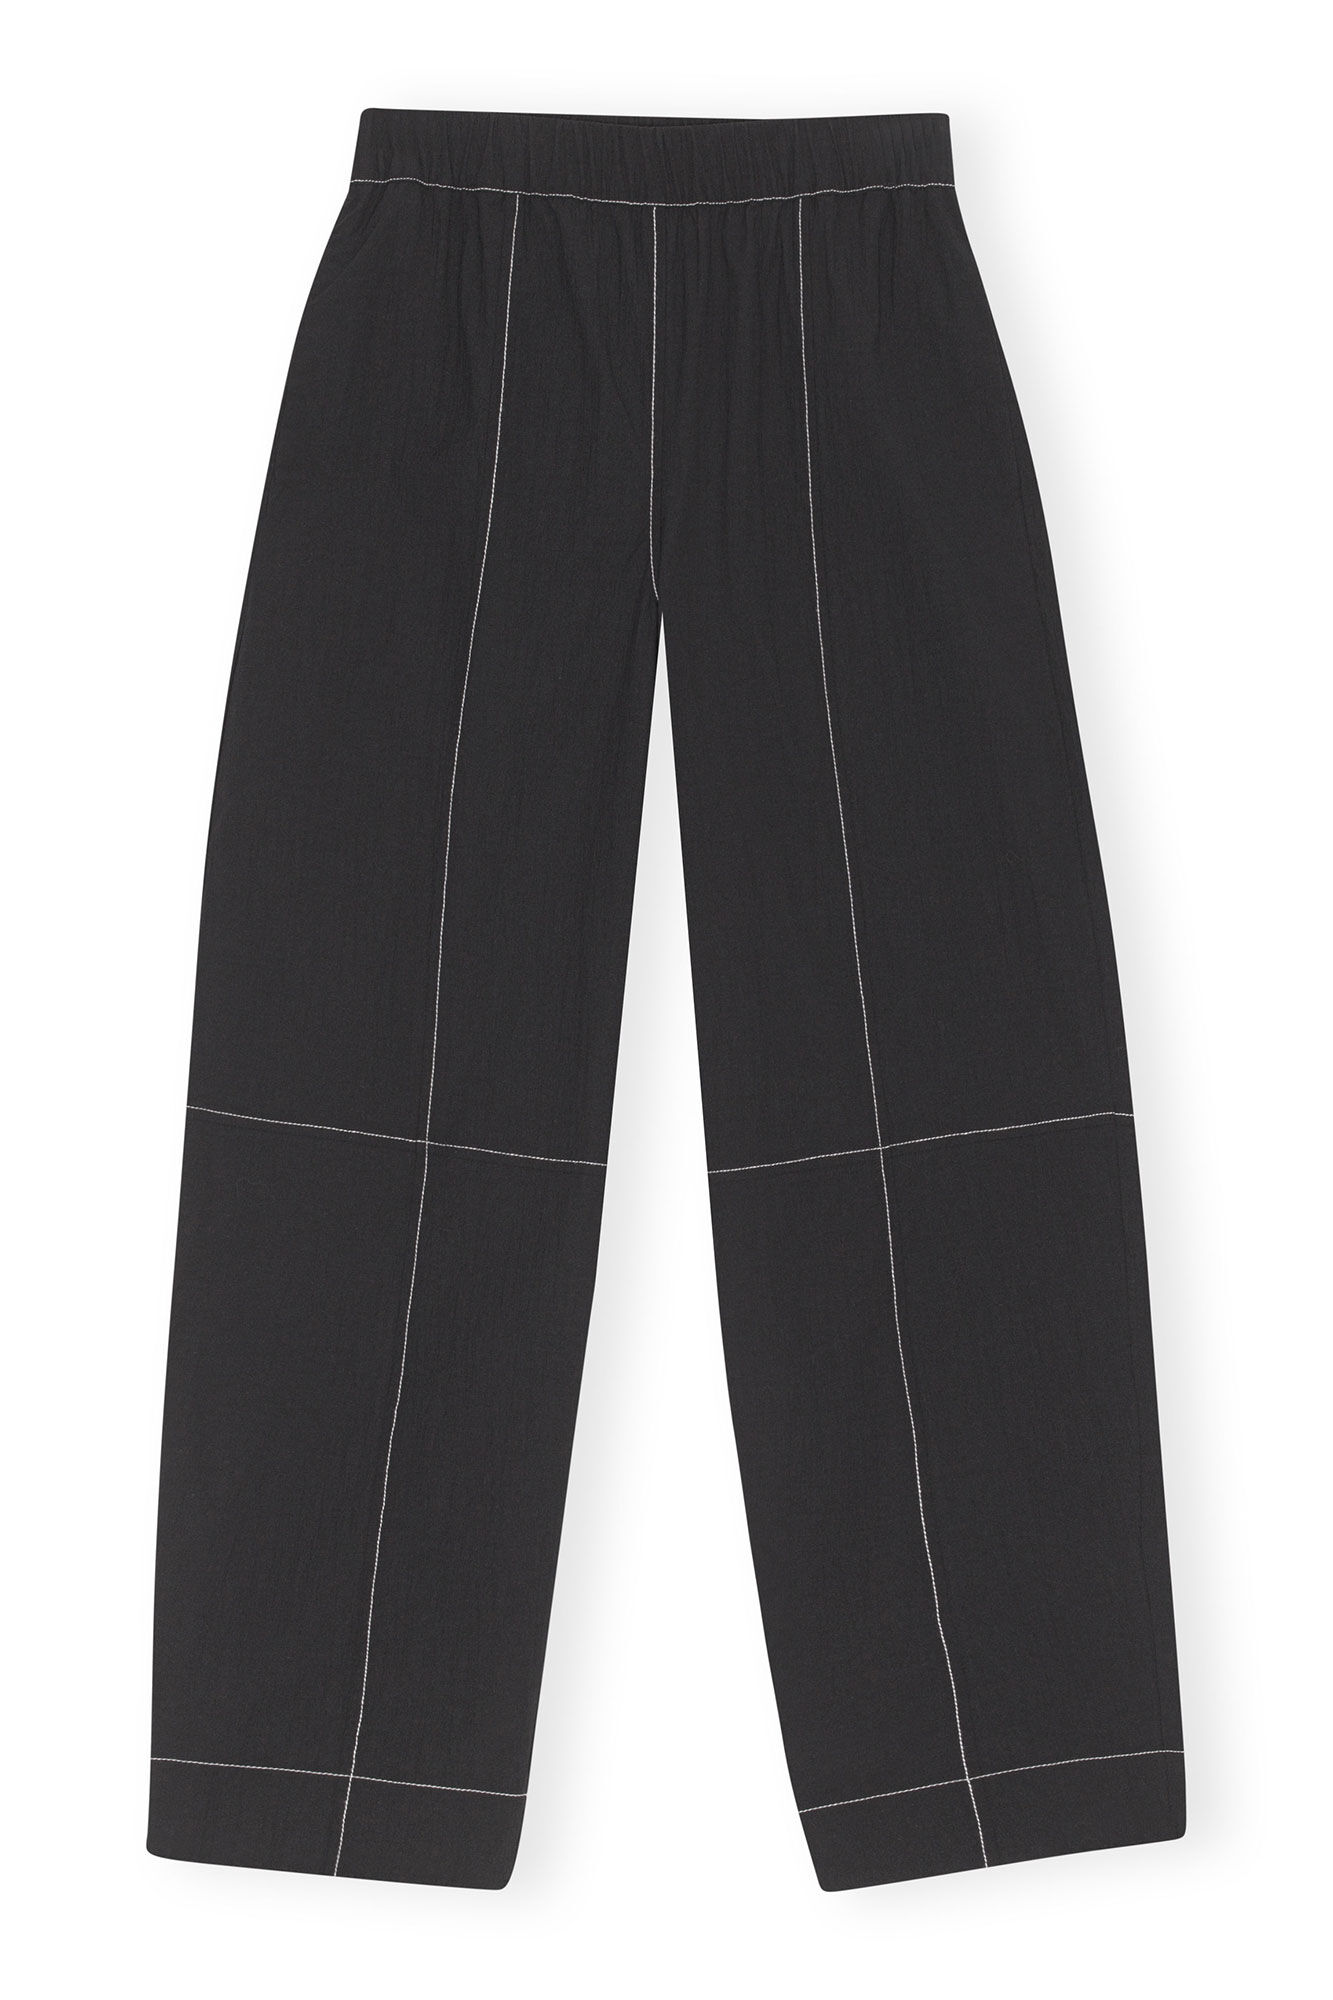 Crêped Jersey Pants - Black - Ladies